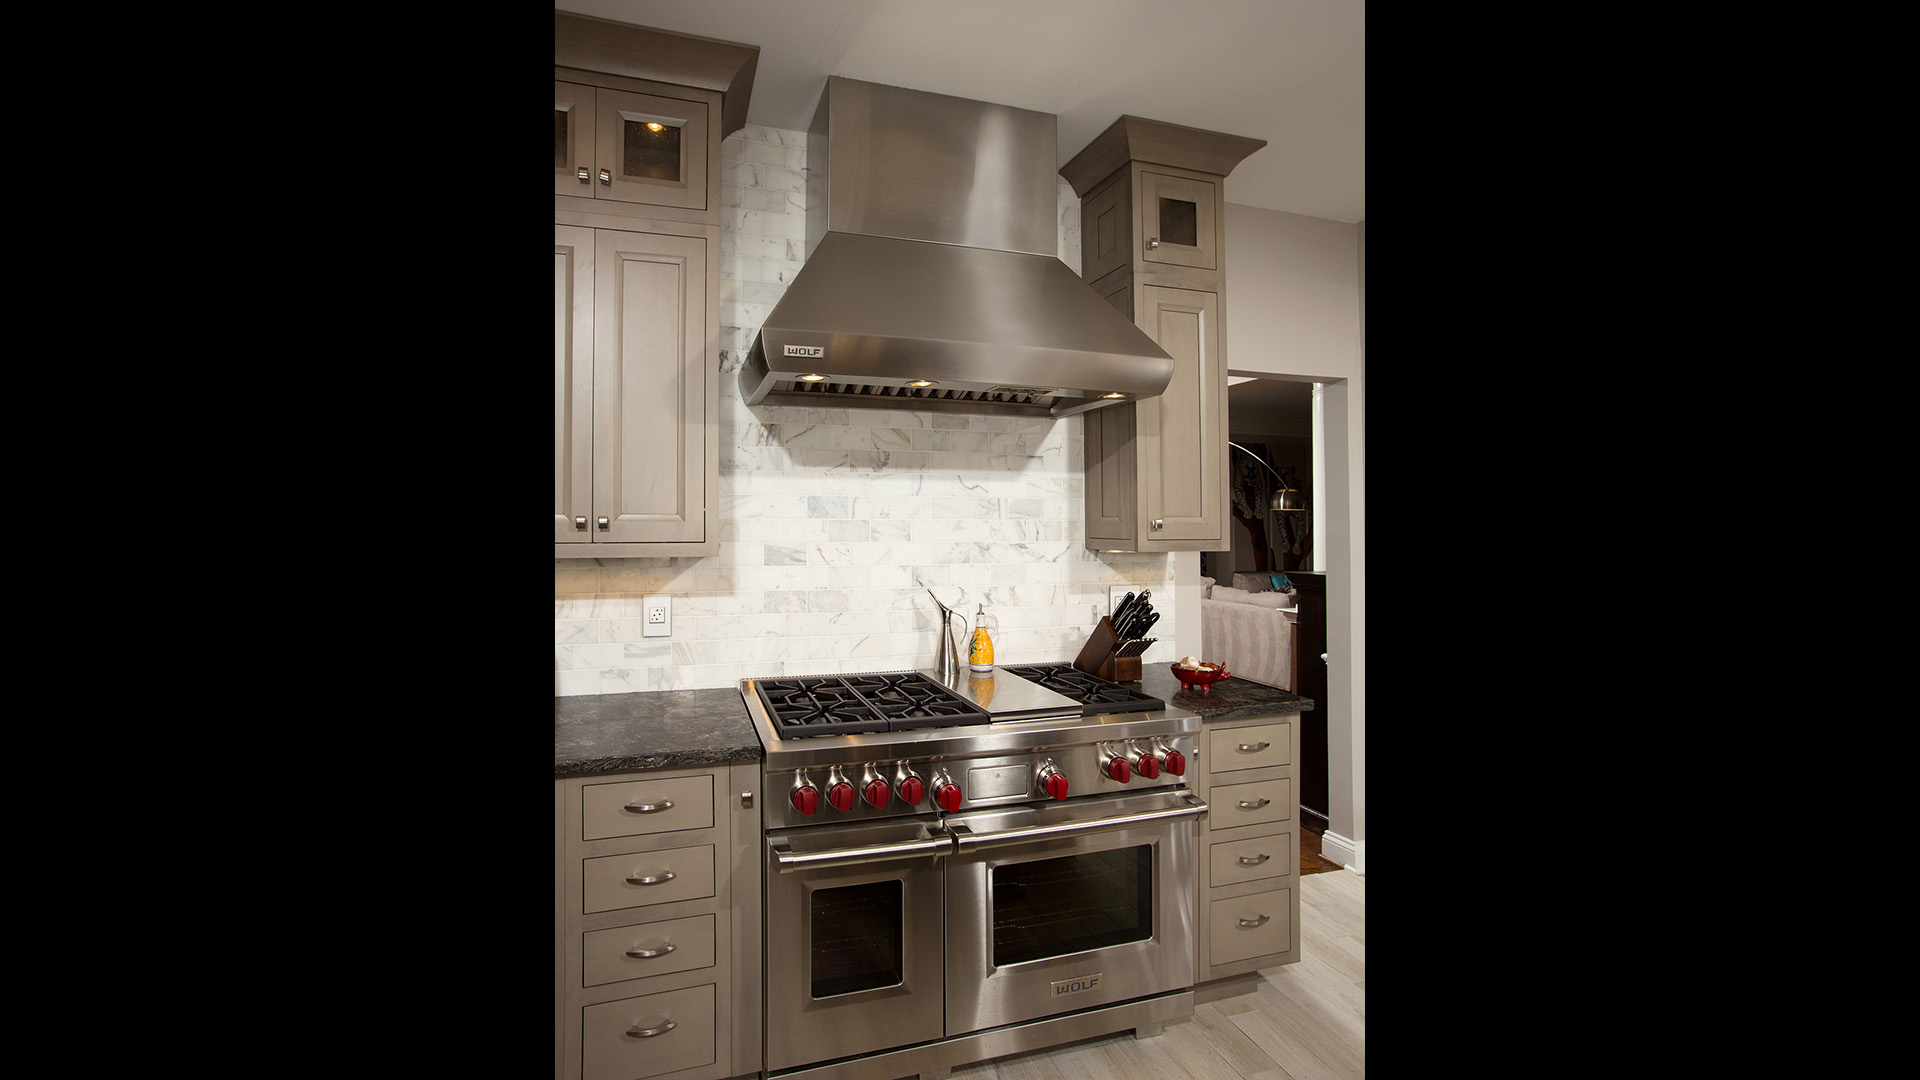 2015 NARI Capital CotY Grand Award Winner, Residential Kitchen Over $150,000